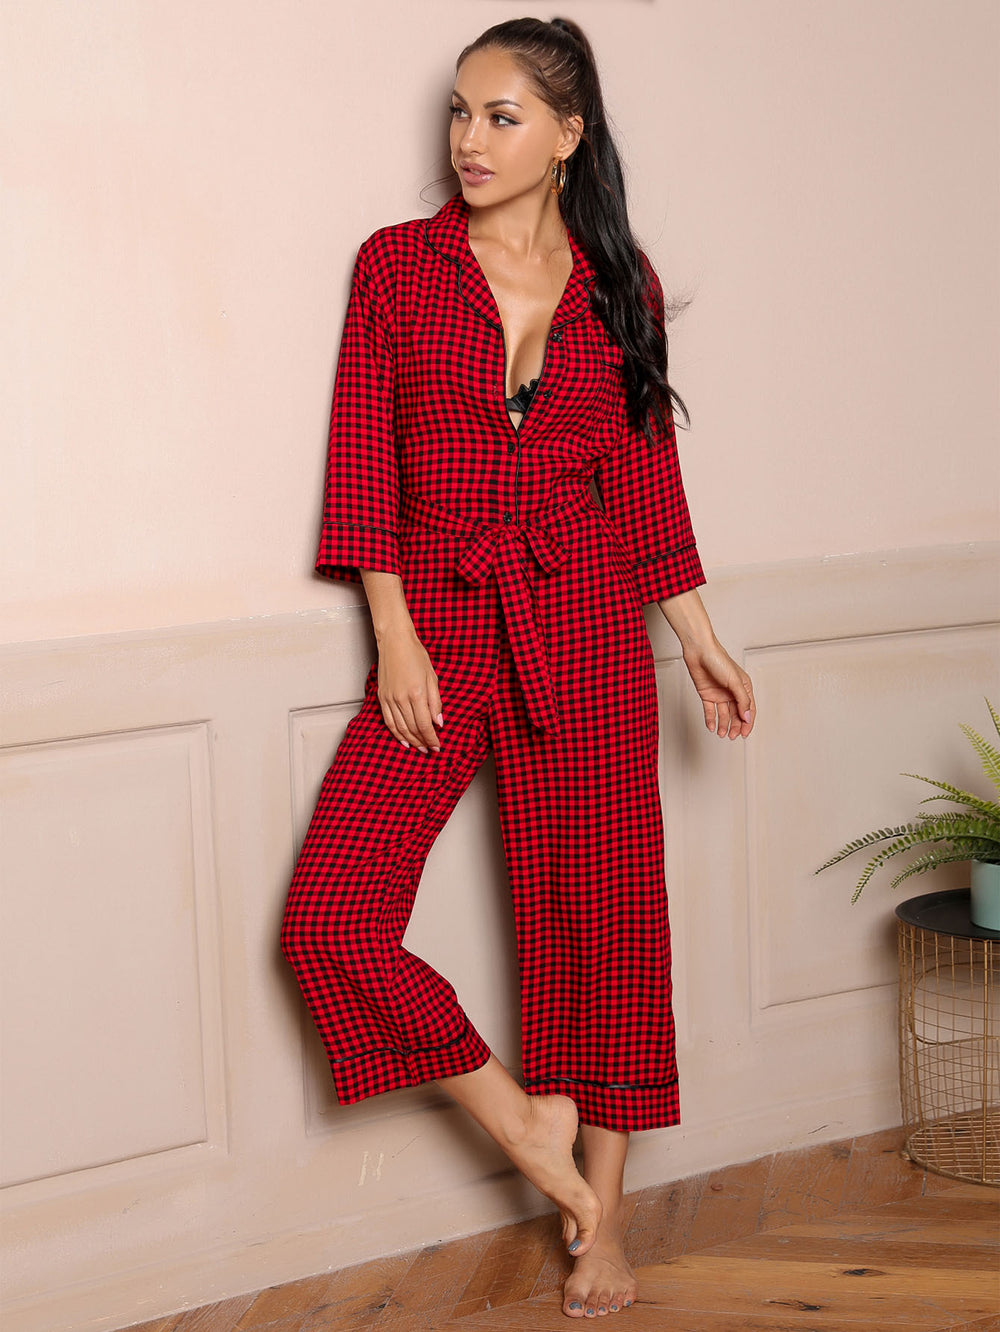 Spring Summer Pajamas Three Quarter Length Sleeves Cardigan V neck Simplicity Red Plaid Jumpsuit Home Wear